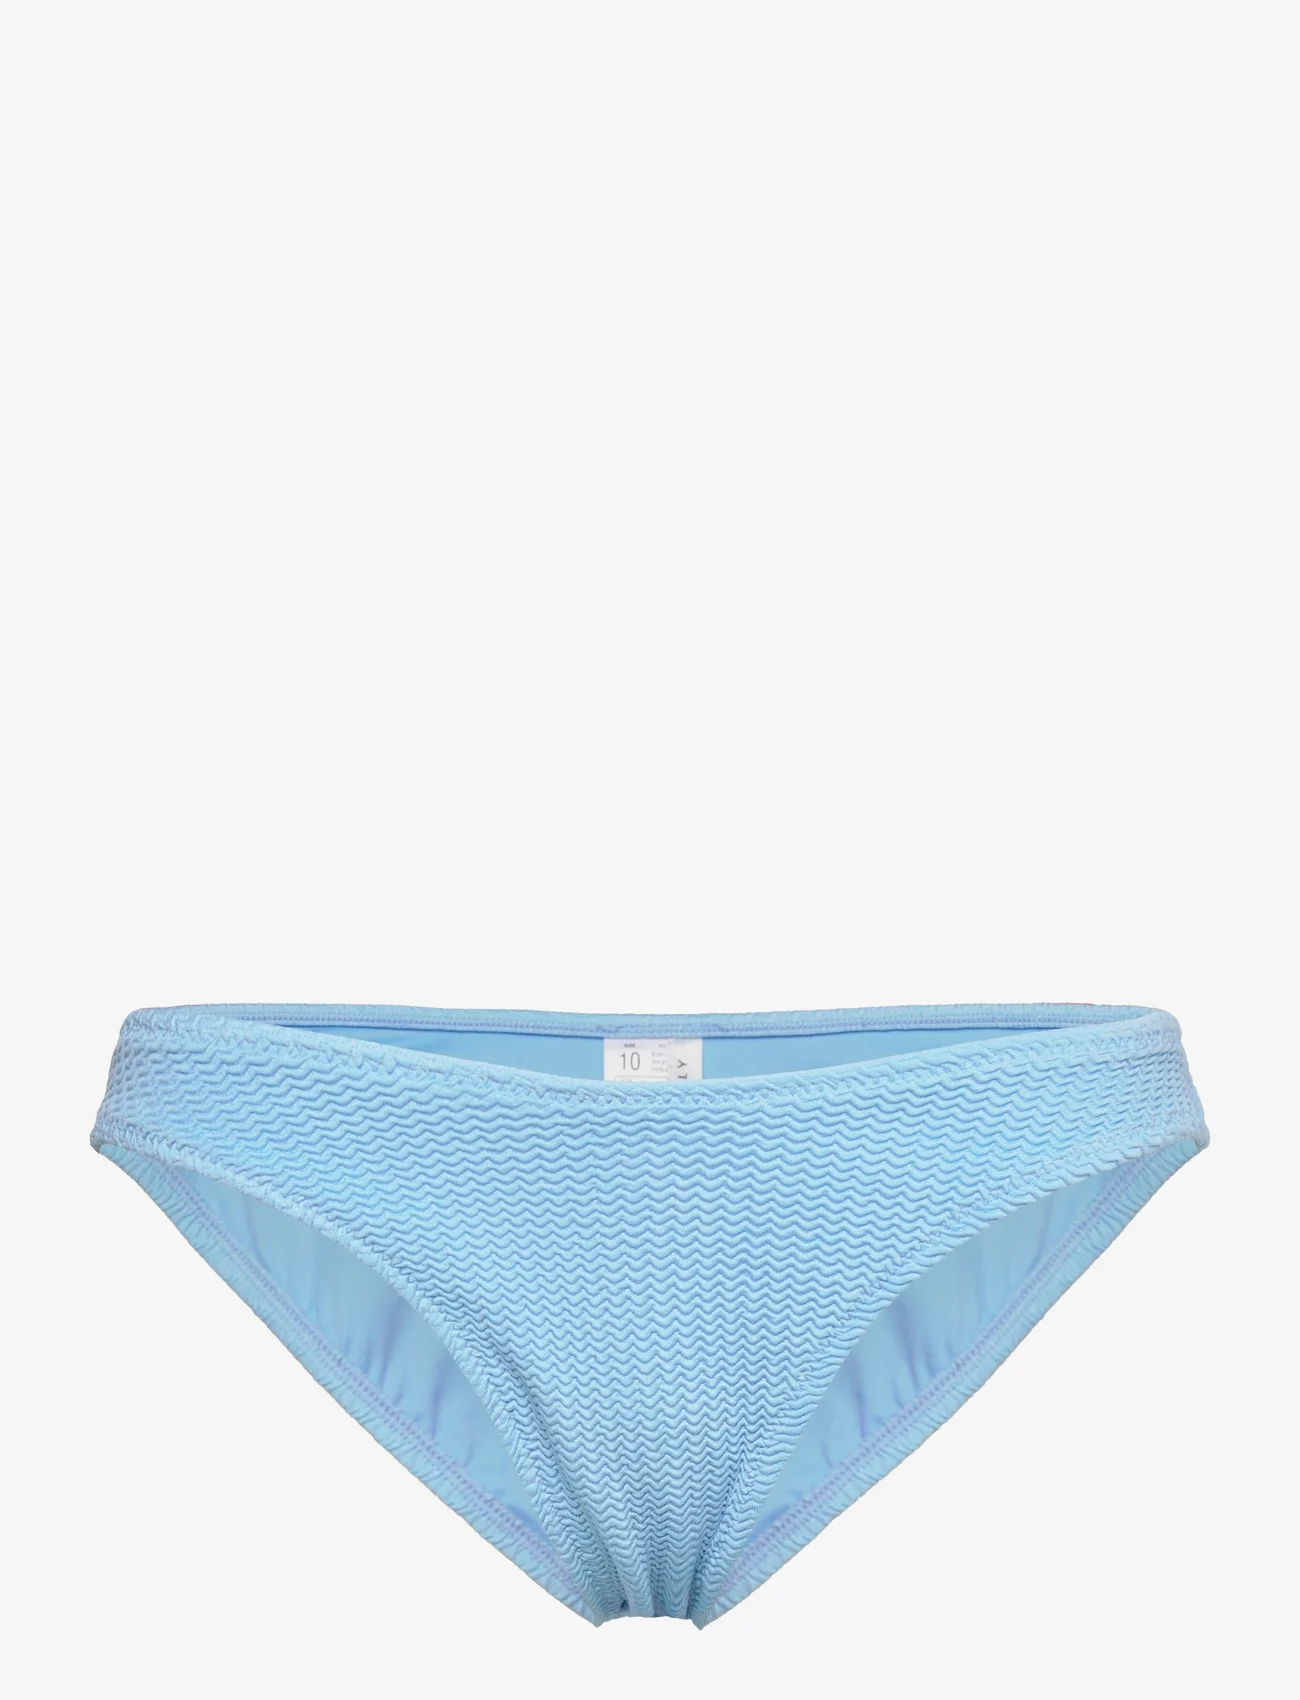 Seafolly - SeaDive High Cut Pant - bikinibriefs - powder blue - 0